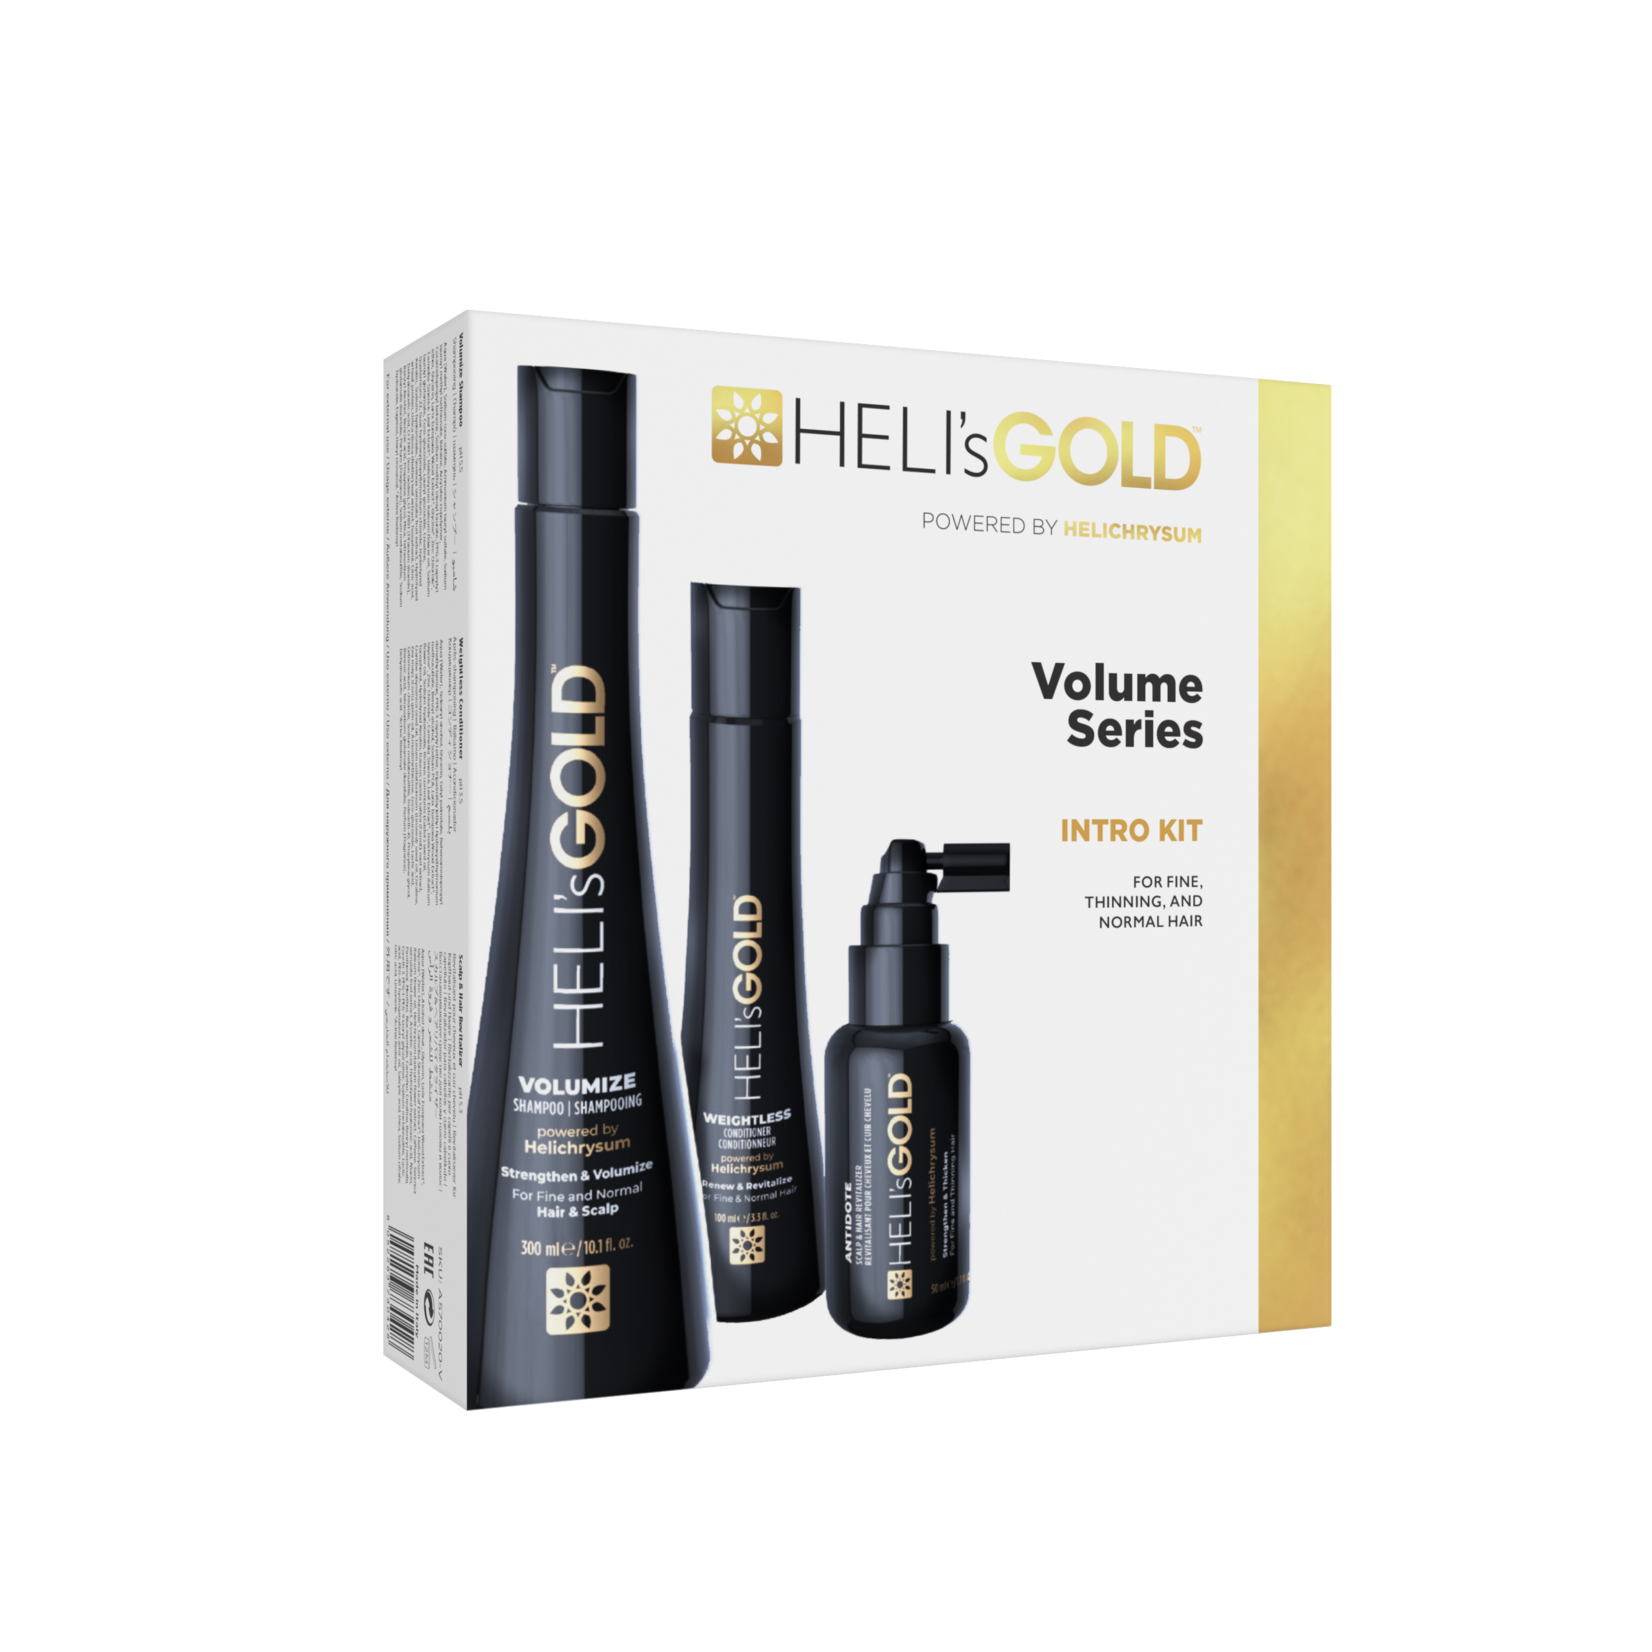 Heli's Gold Volume Series Intro Kit